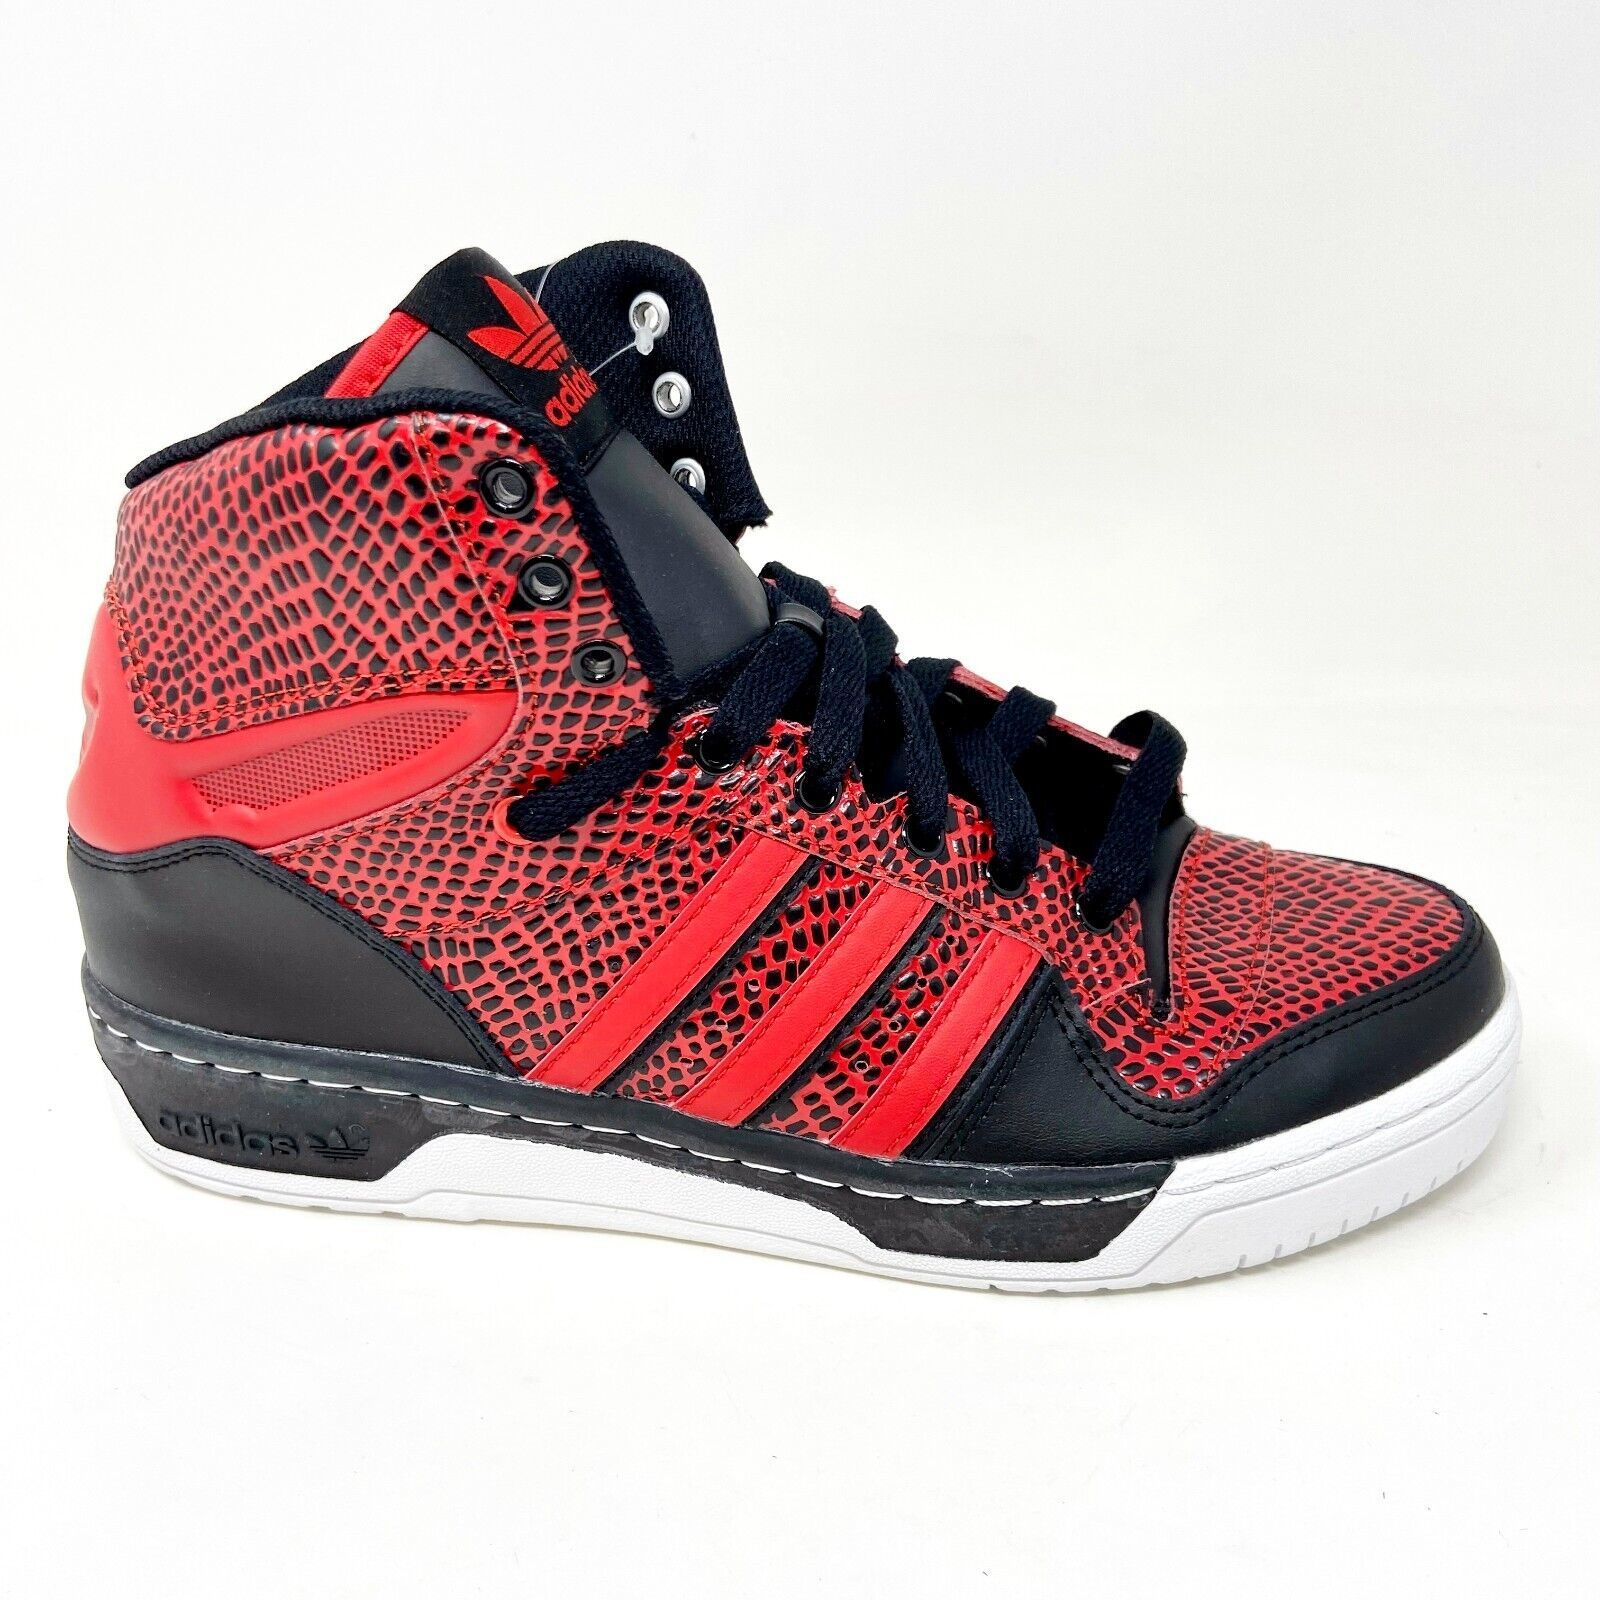 Adidas Originals Metro Attitude Black Pop Red Mens Patrick Ewing Sneakers C75408